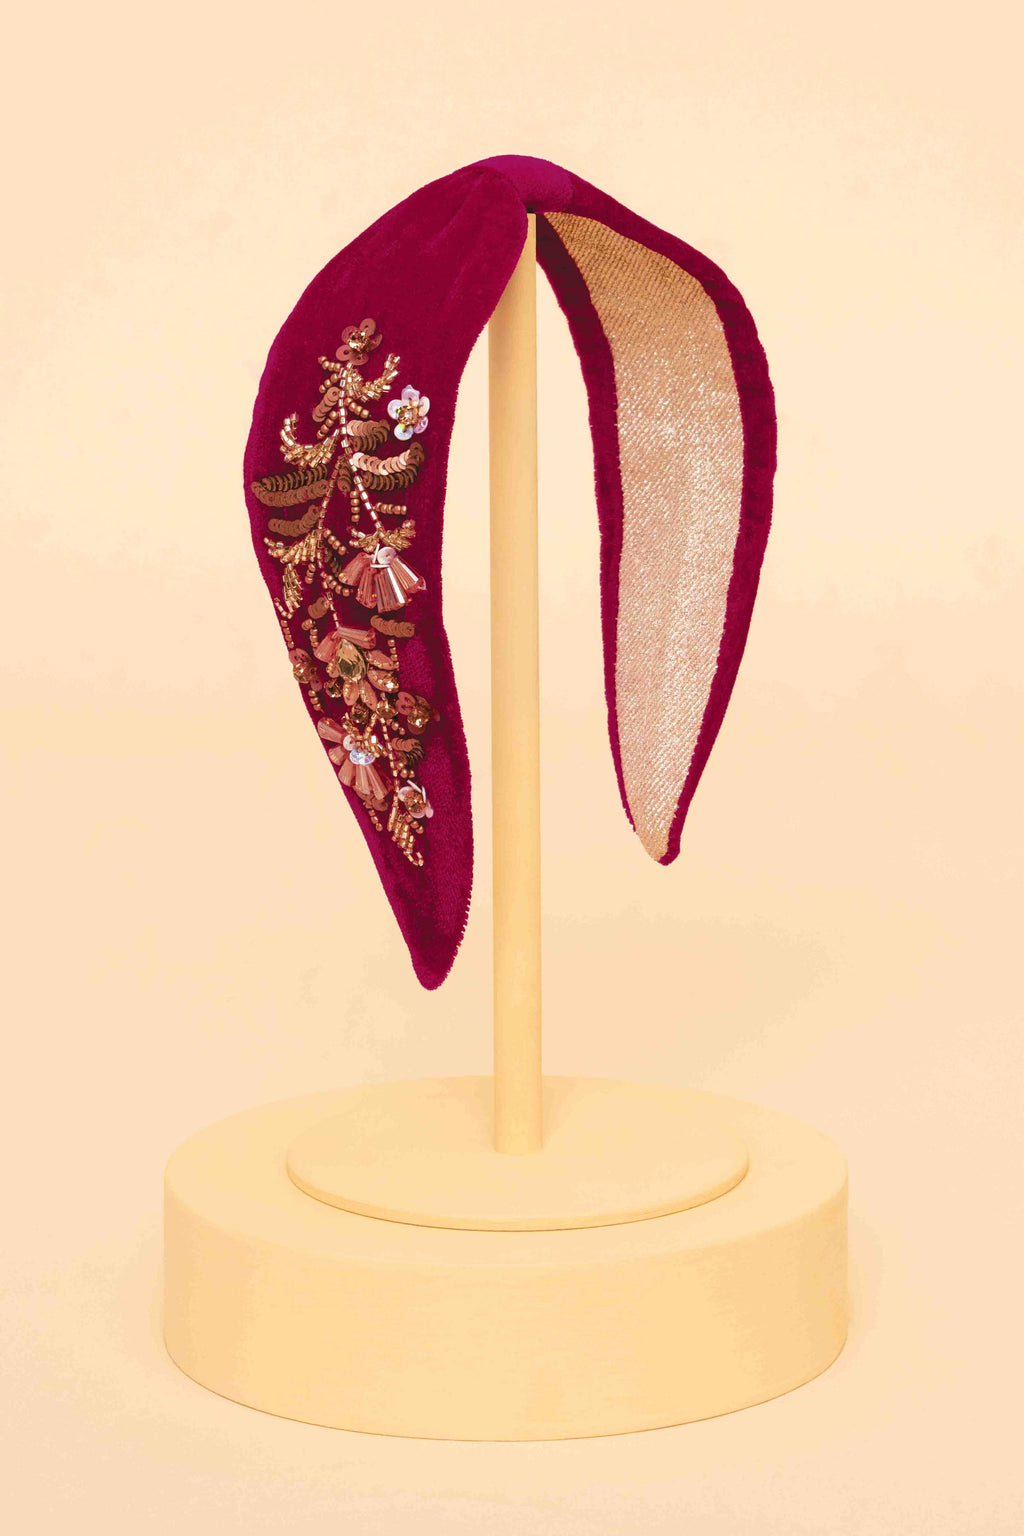 Velvet Embellished Headband - Golden Wildflowers, Fuchsia